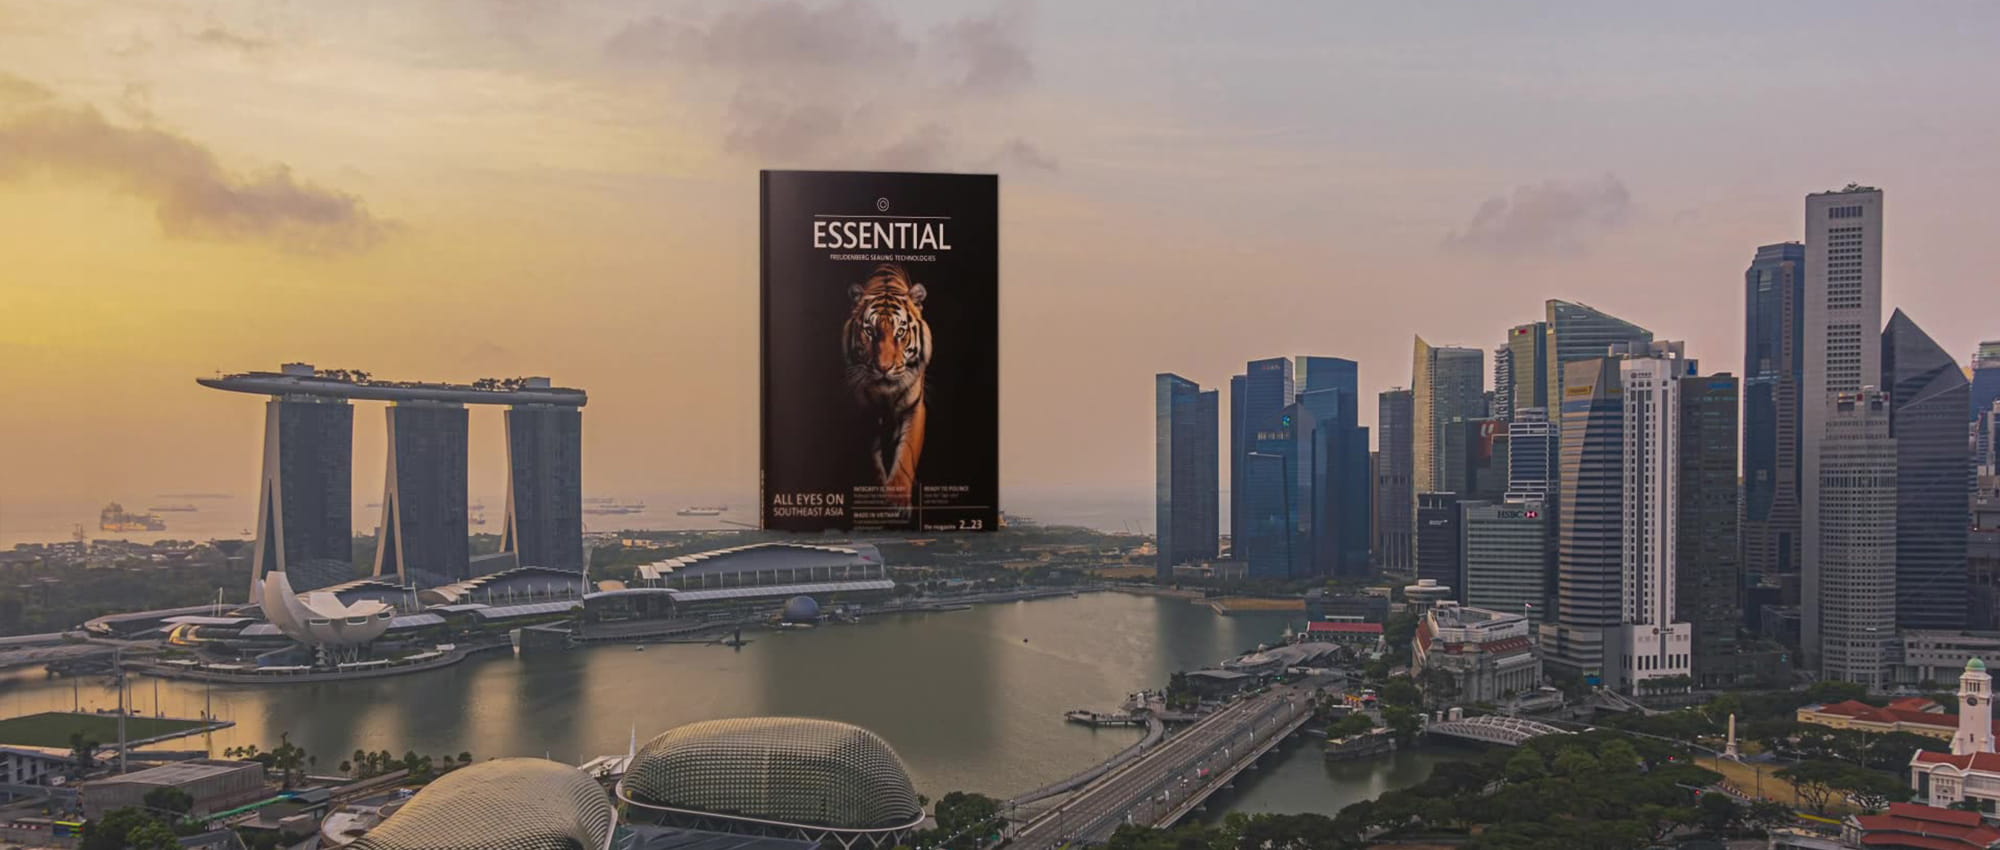 Skyline of Singapore with ESSENTIAL magazine on the horizon